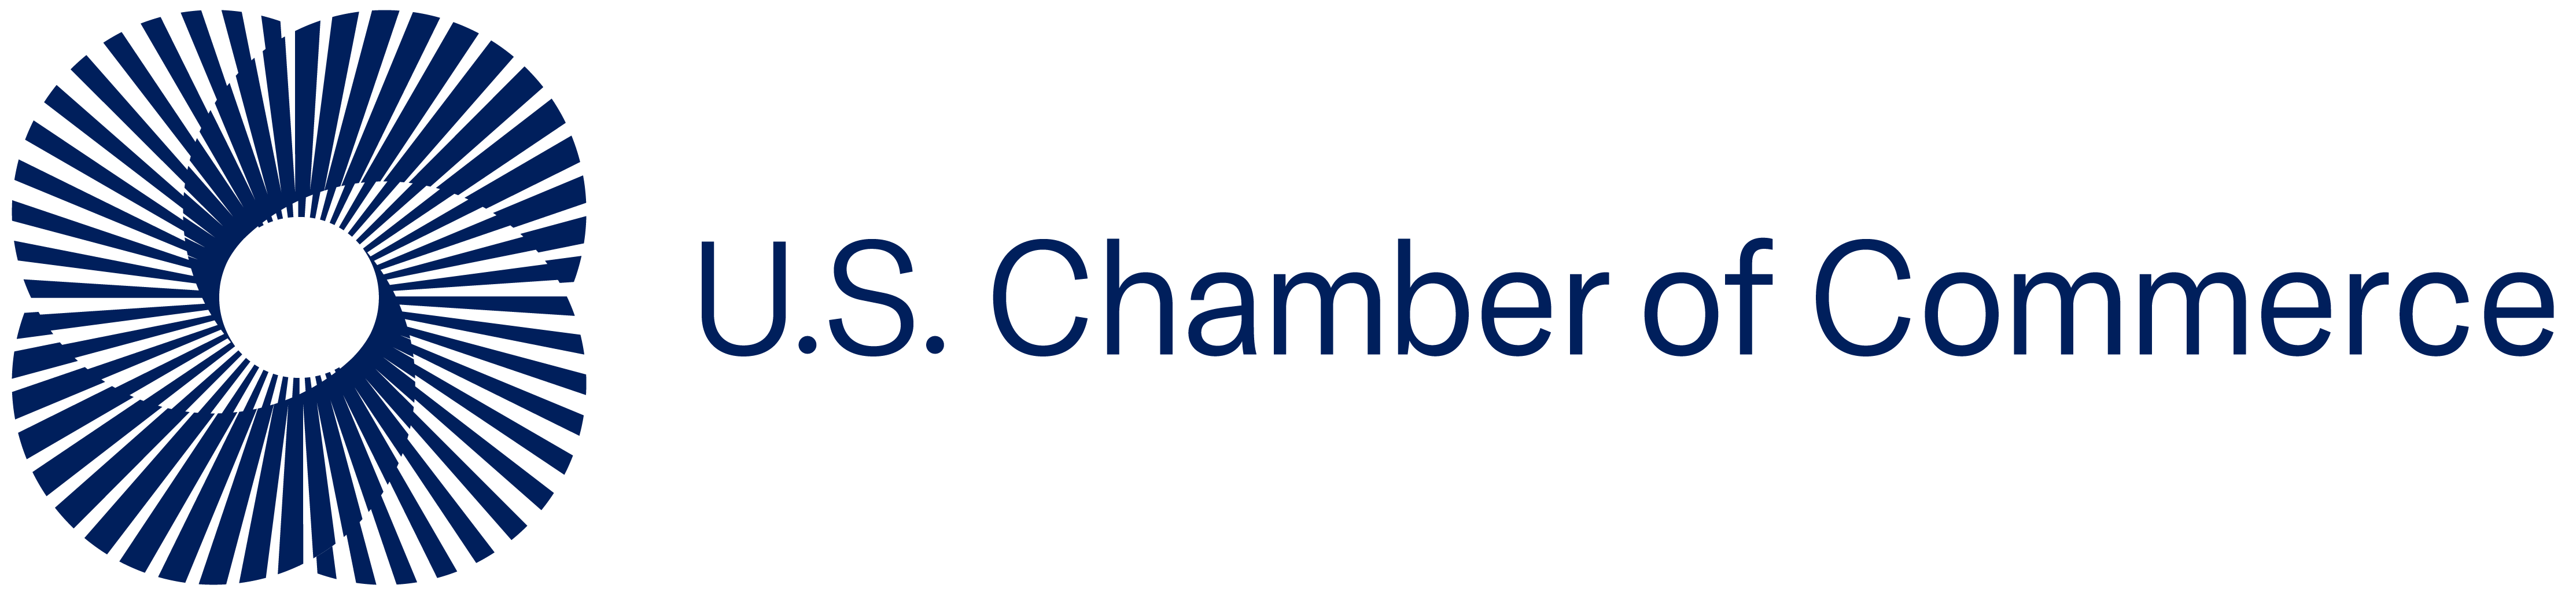 chamber-long